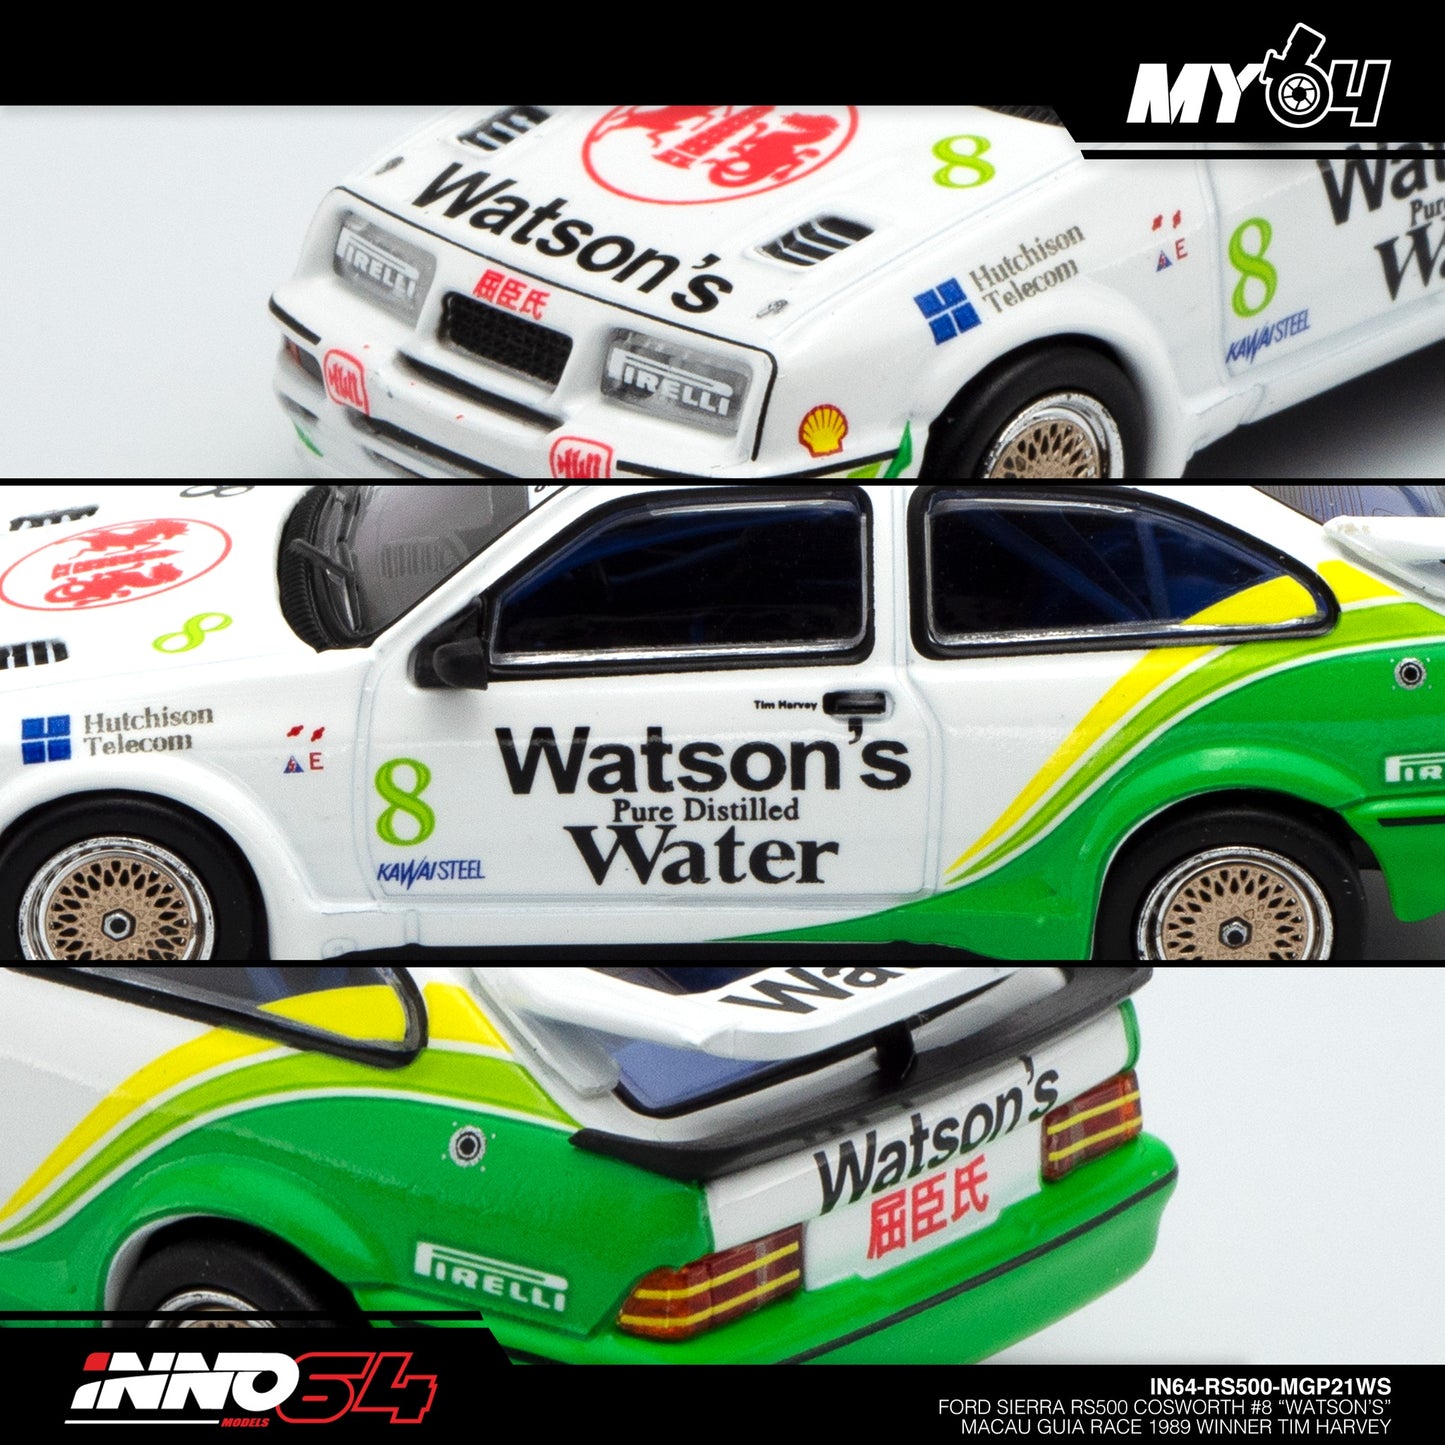 [INNO64] Ford Sierra Cosworth RS500 #8 "WATSON'S" Macau Guia Race 1989 Winner Tim Harvey